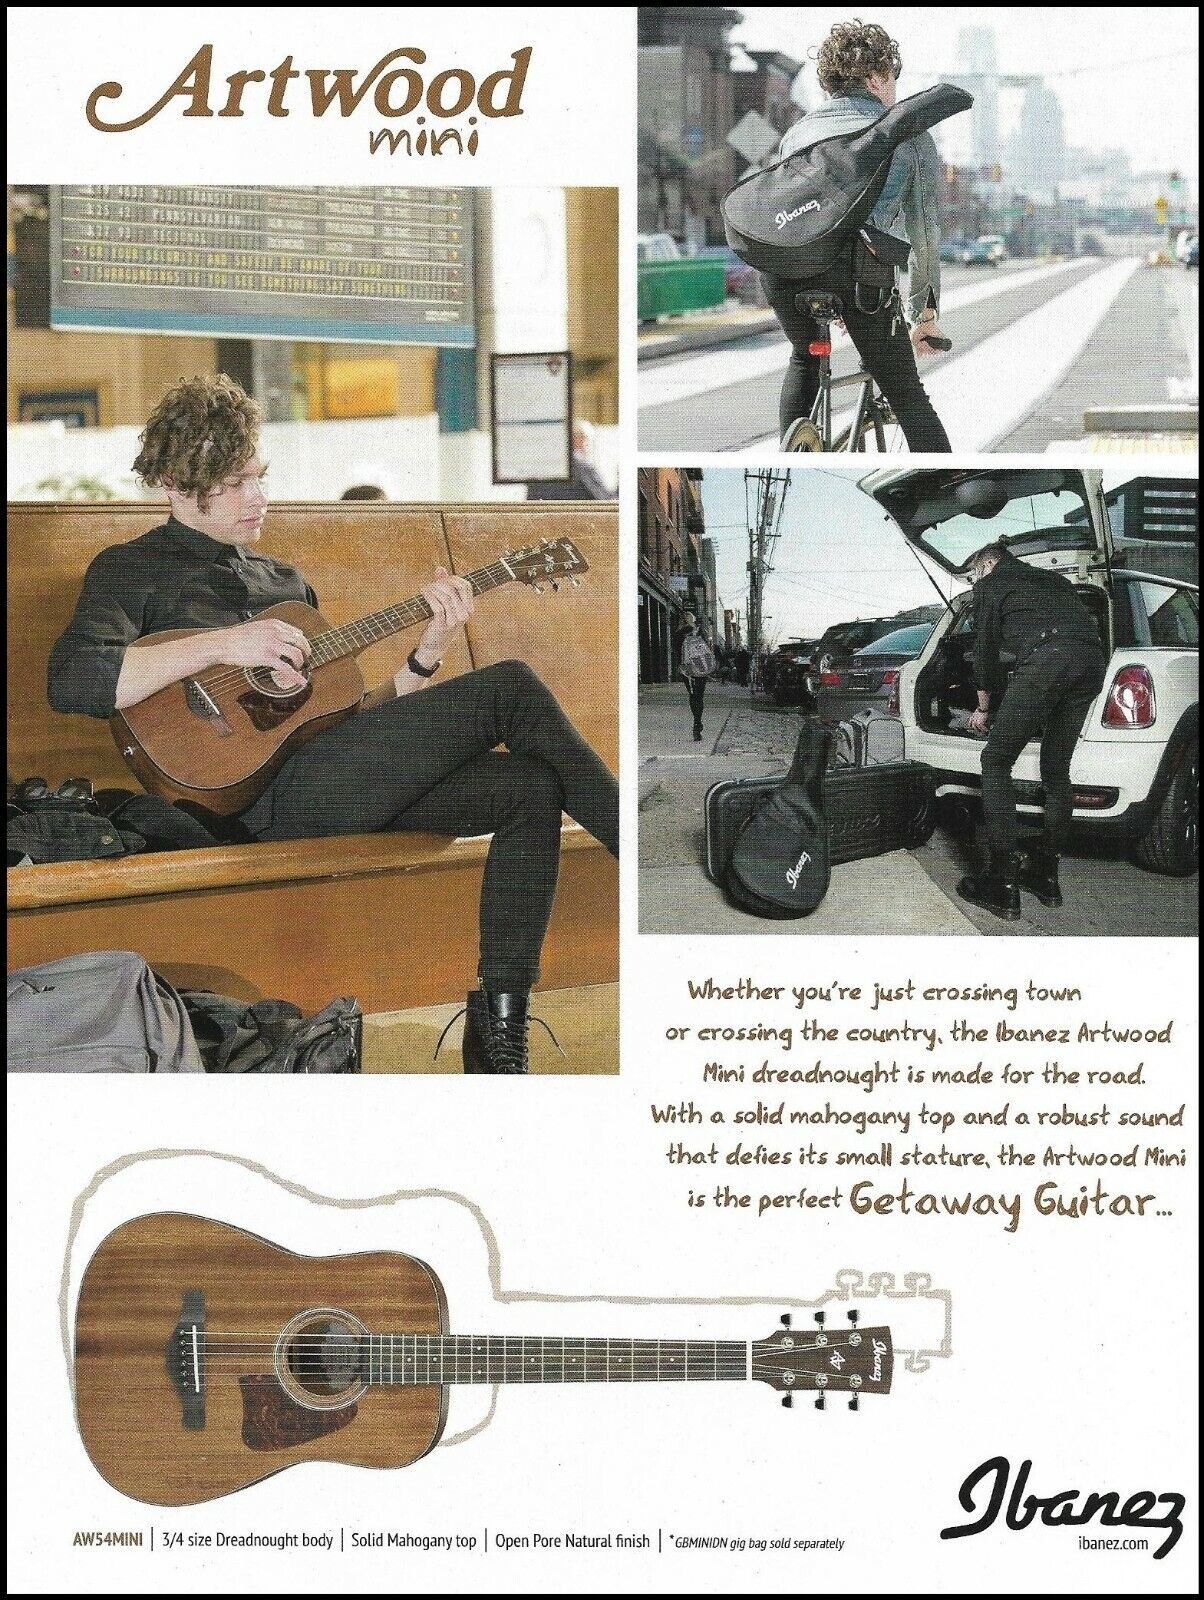 Ibanez Artwood AW54MINI Mini acoustic guitar series advertisement print ad